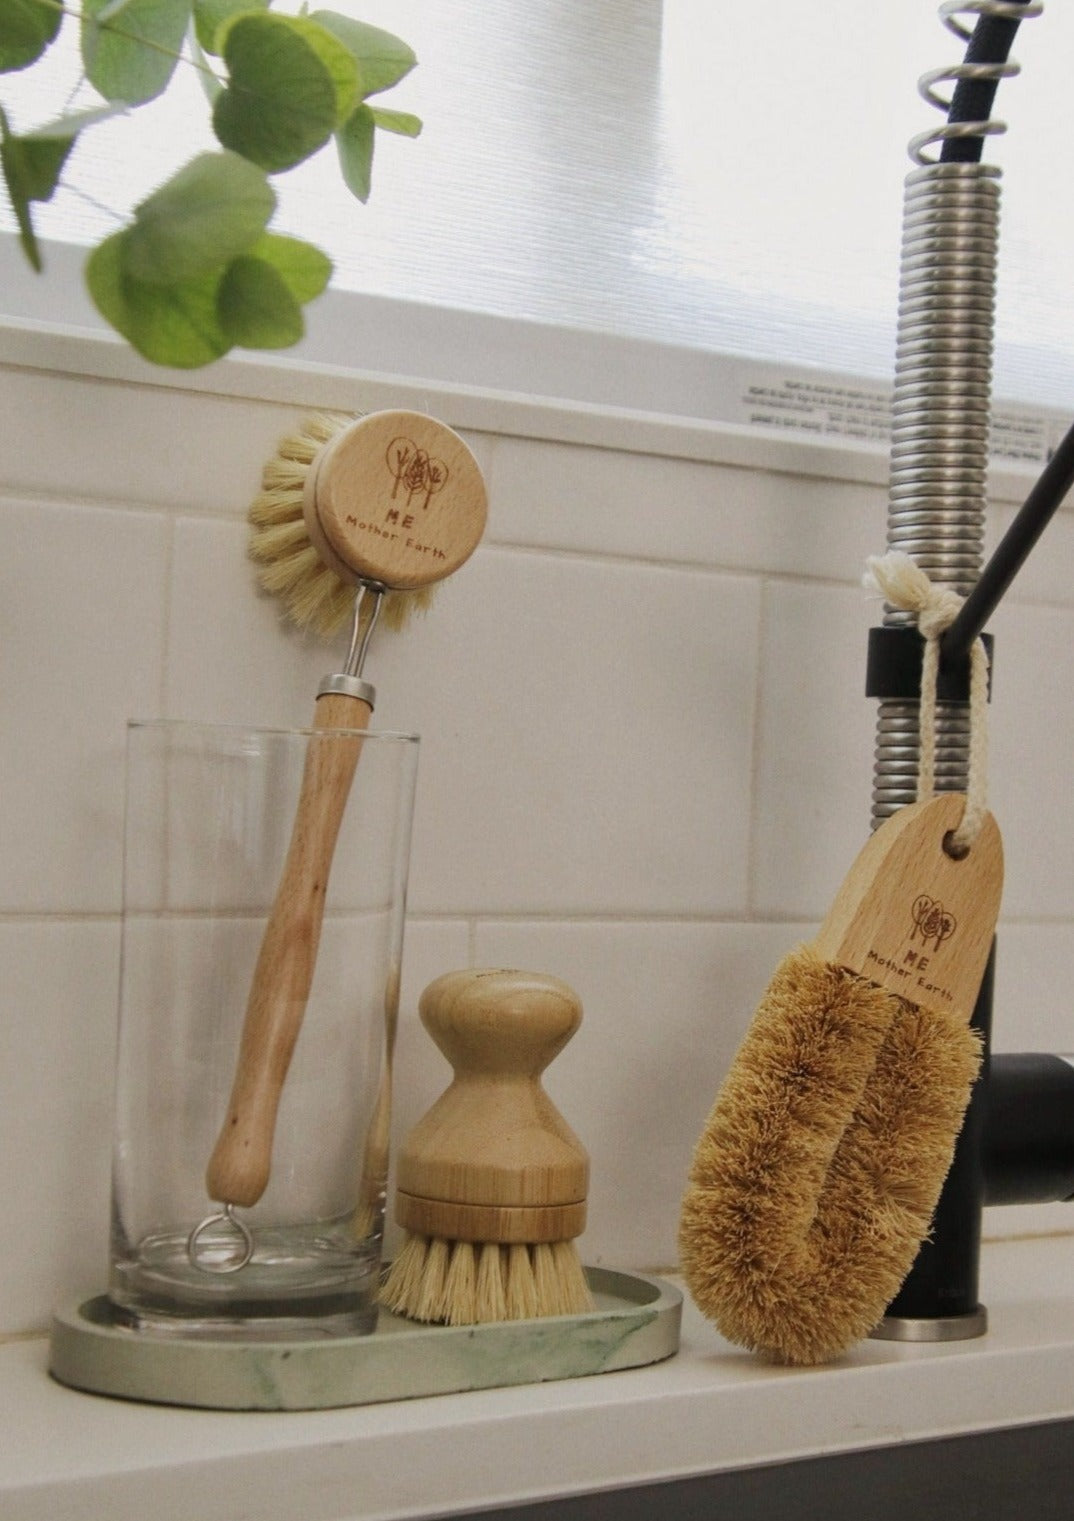 ecofworld 3pcs Bamboo Mini Scrub, Wooden Dish Scrubbies Set Coconut  Bristle, Pot Scrubber Cast Iron Skillet Kitchen Sink Bathroom